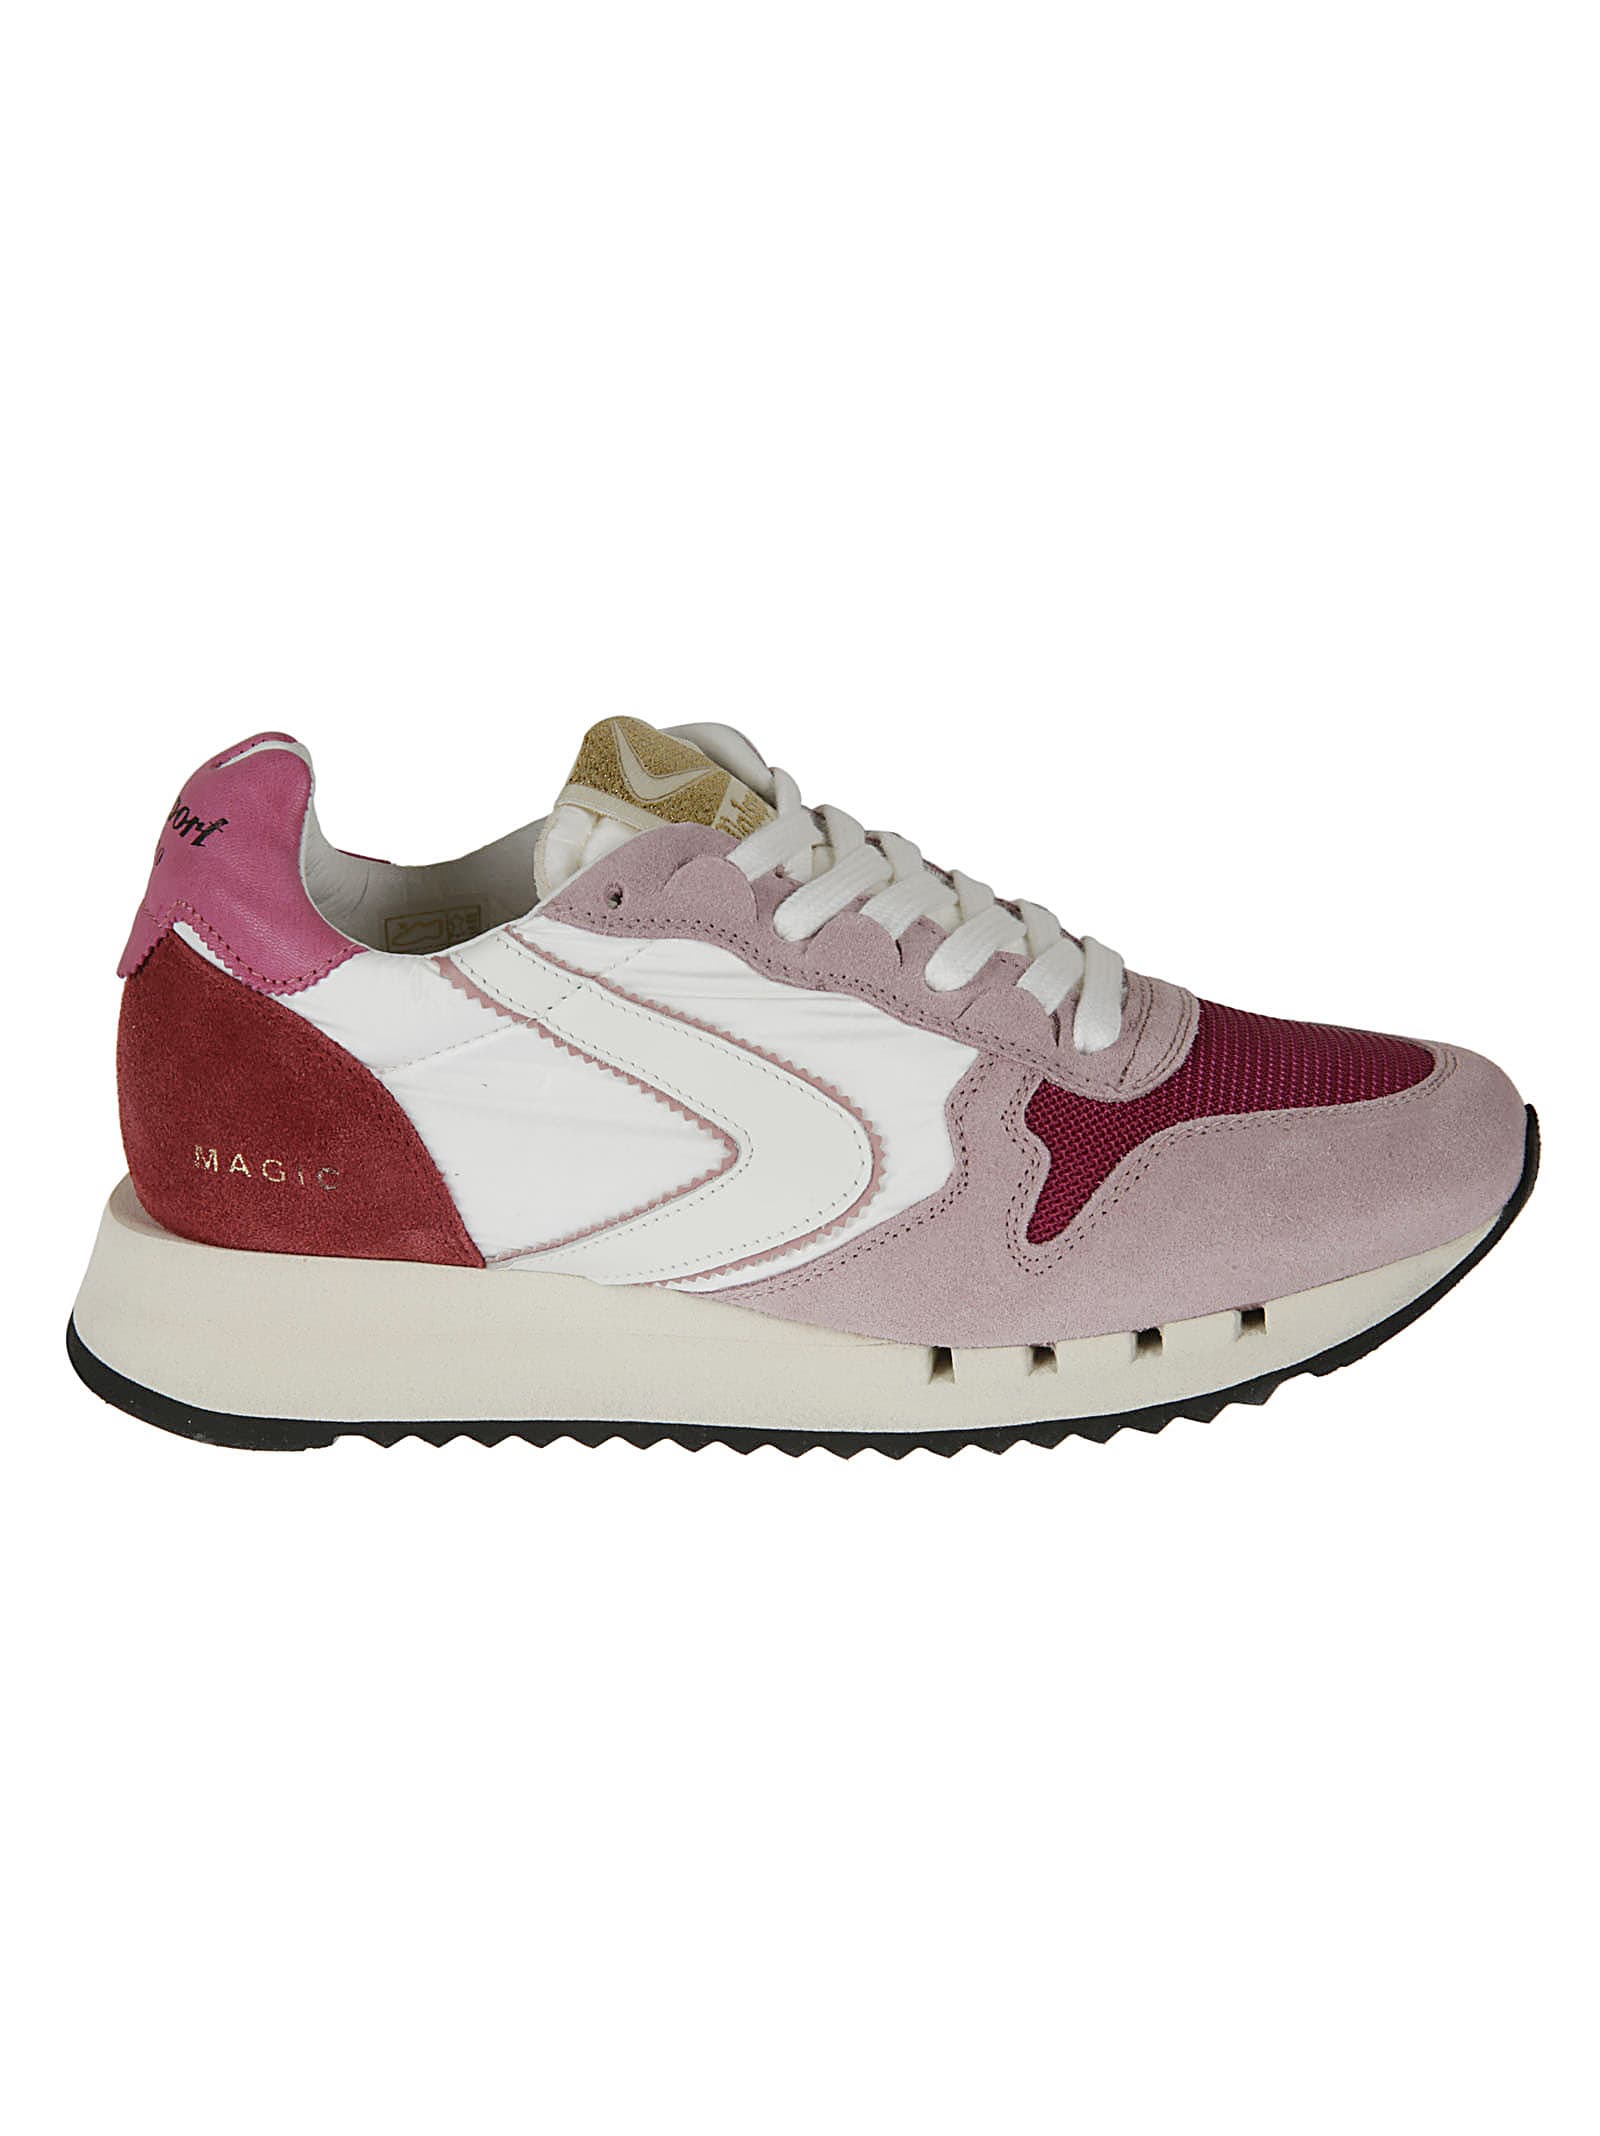 Valsport Magic Run Sneakers In Pink | ModeSens